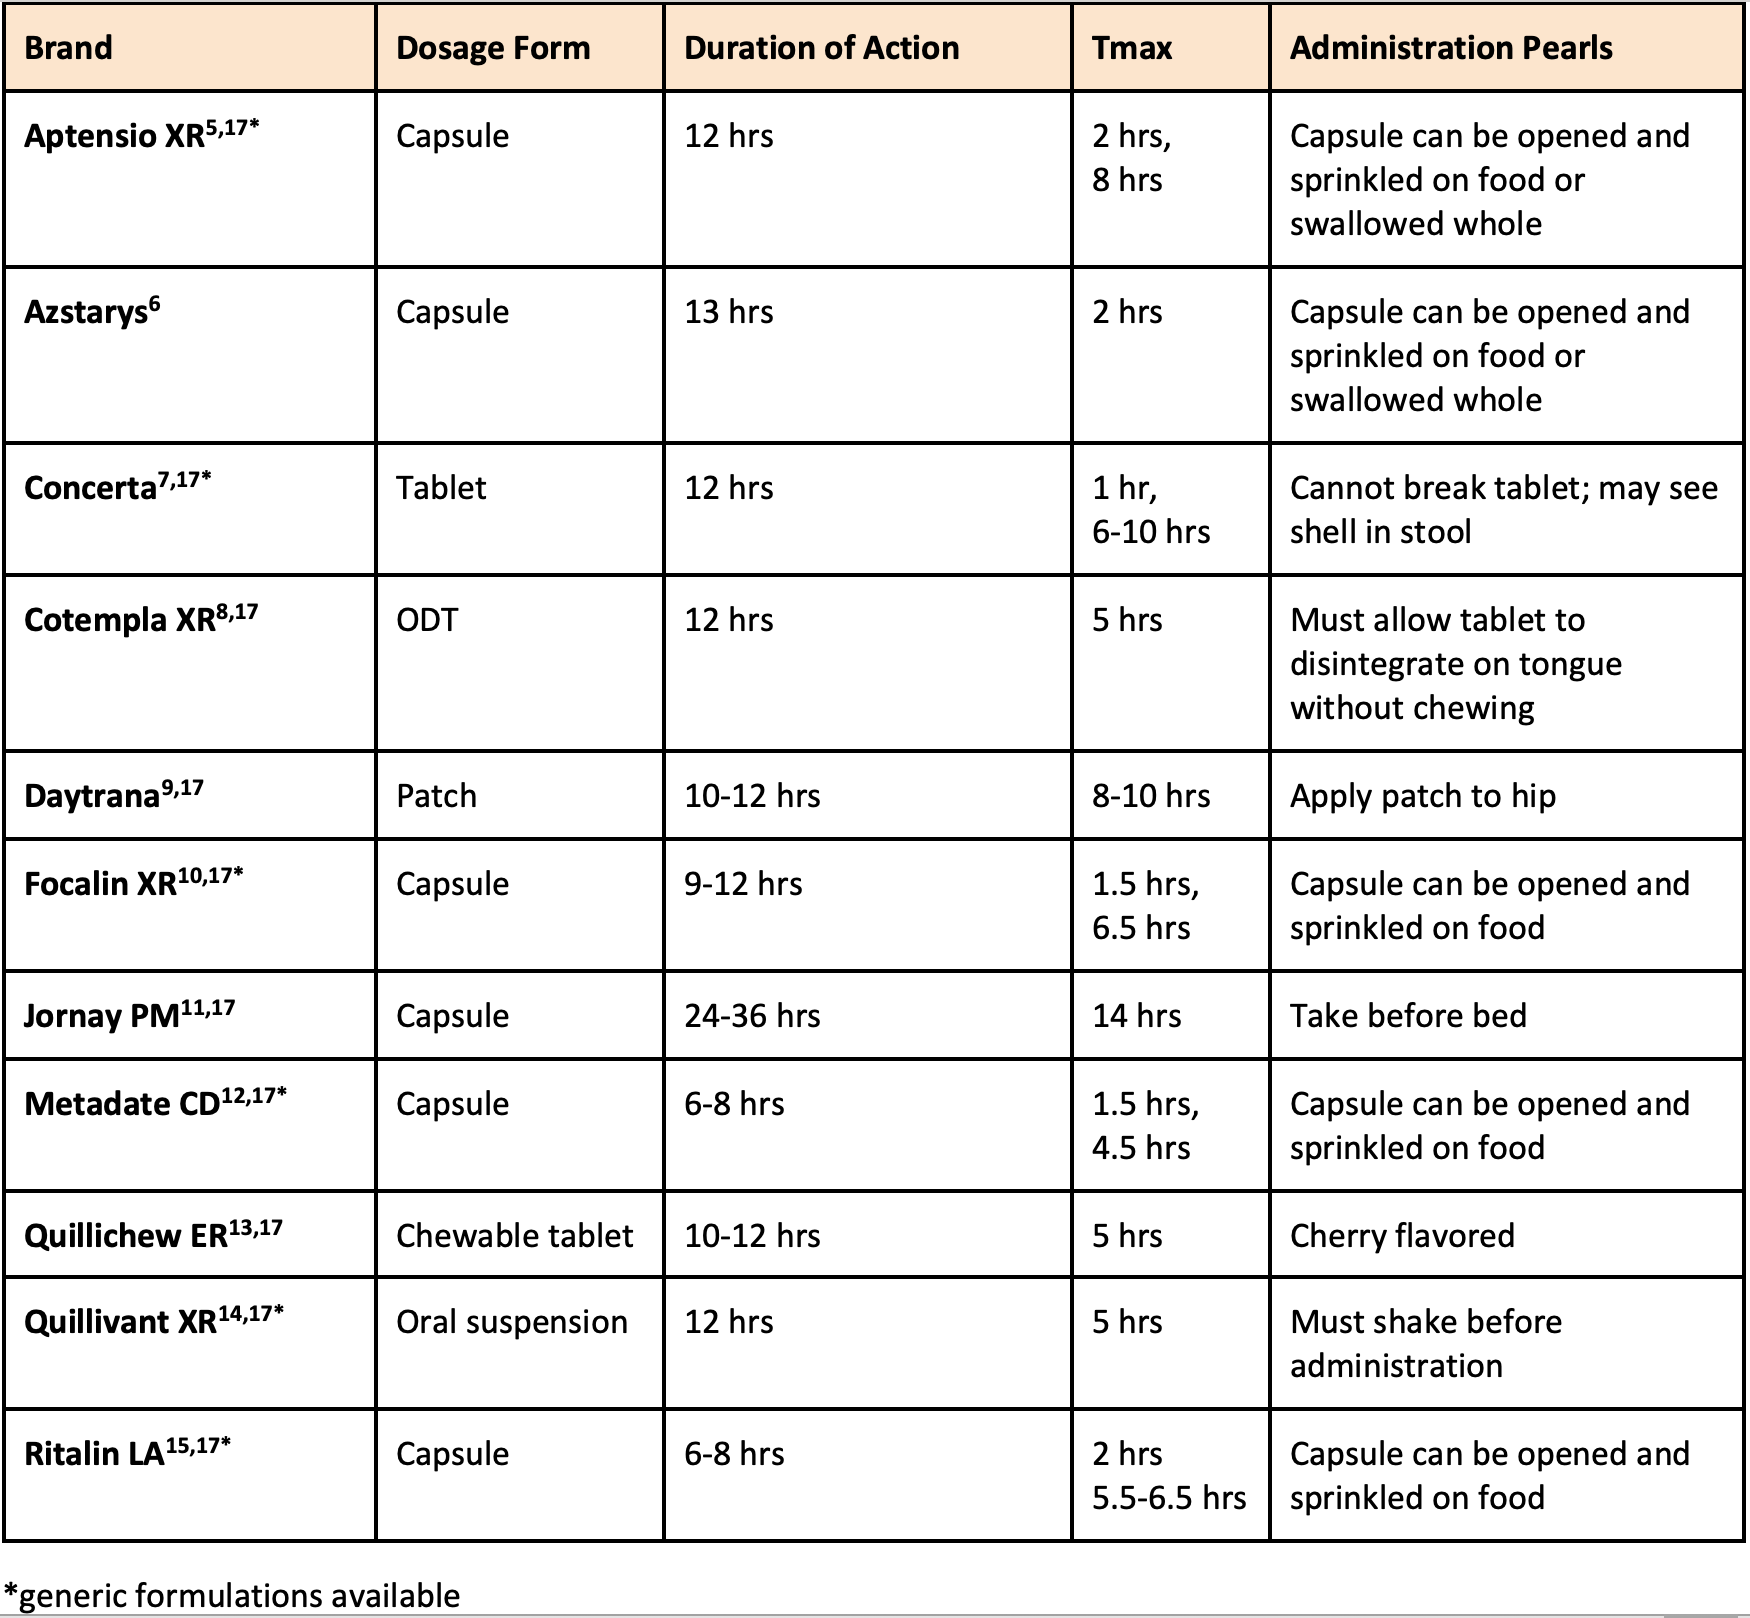 Table. Methylphenidate formulations for attention-deficit hyperactivity disorder.